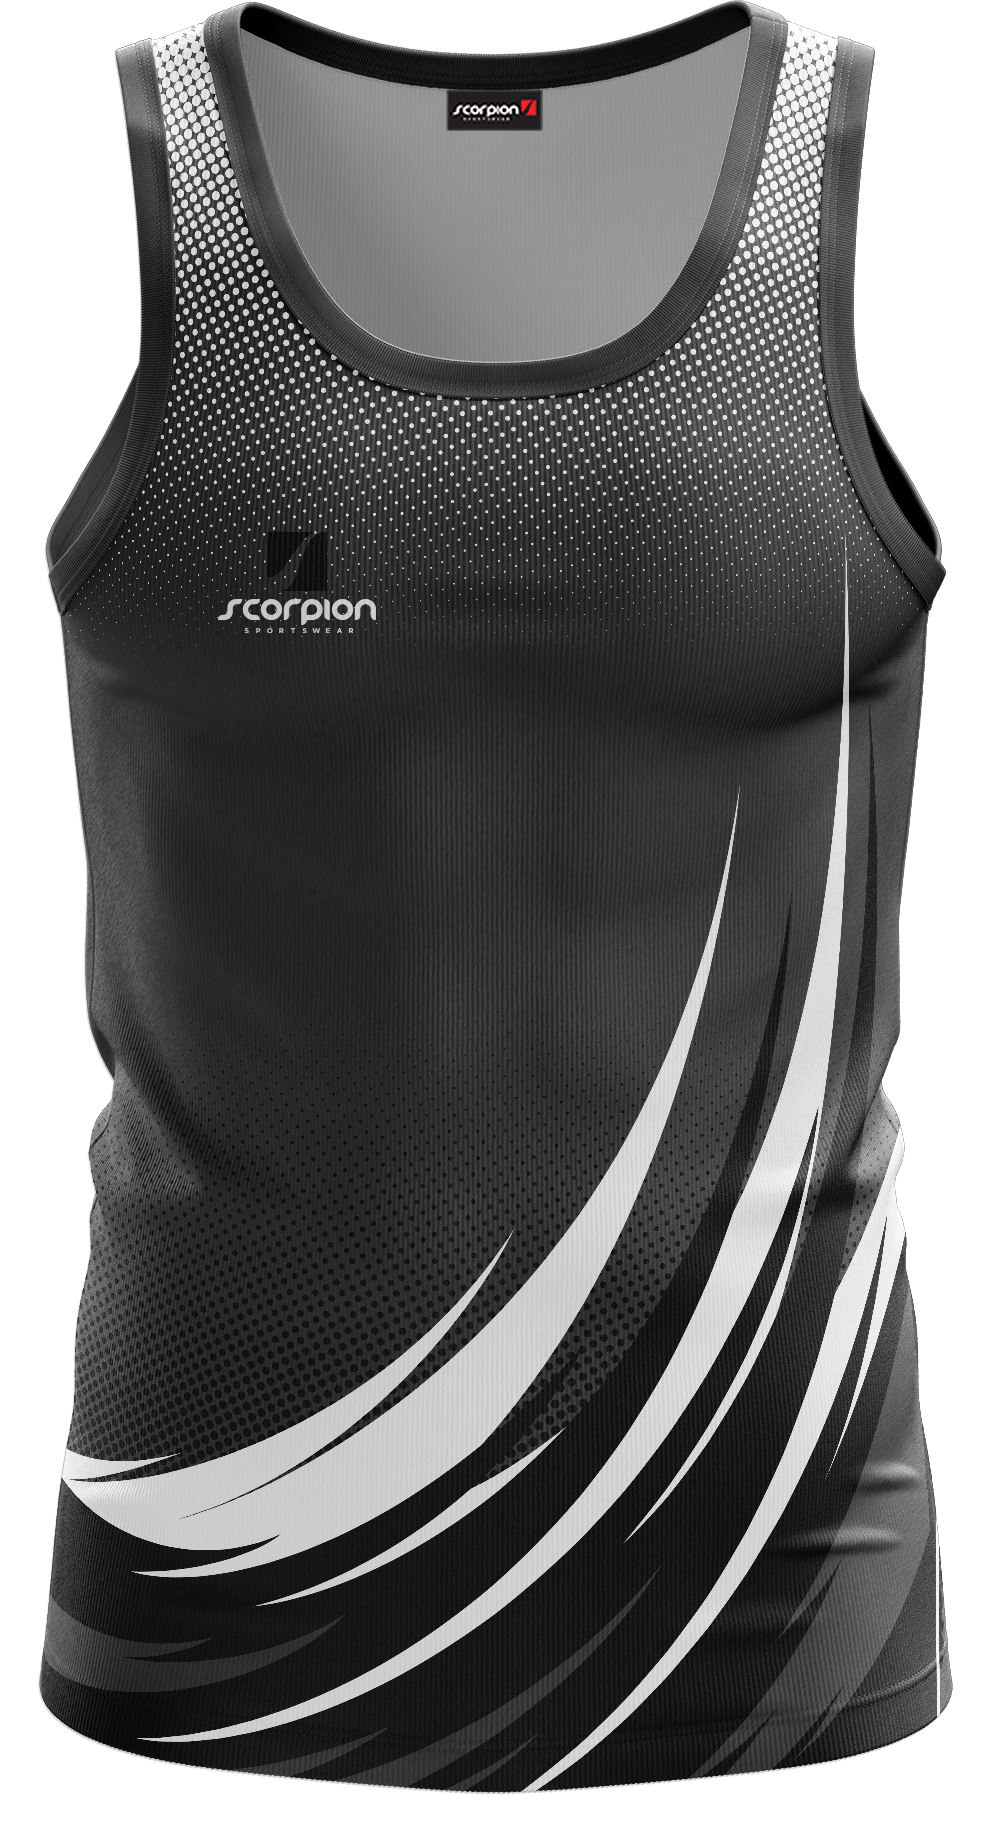 Scorpion Vests Pattern 5 - Charcoal/Black/White